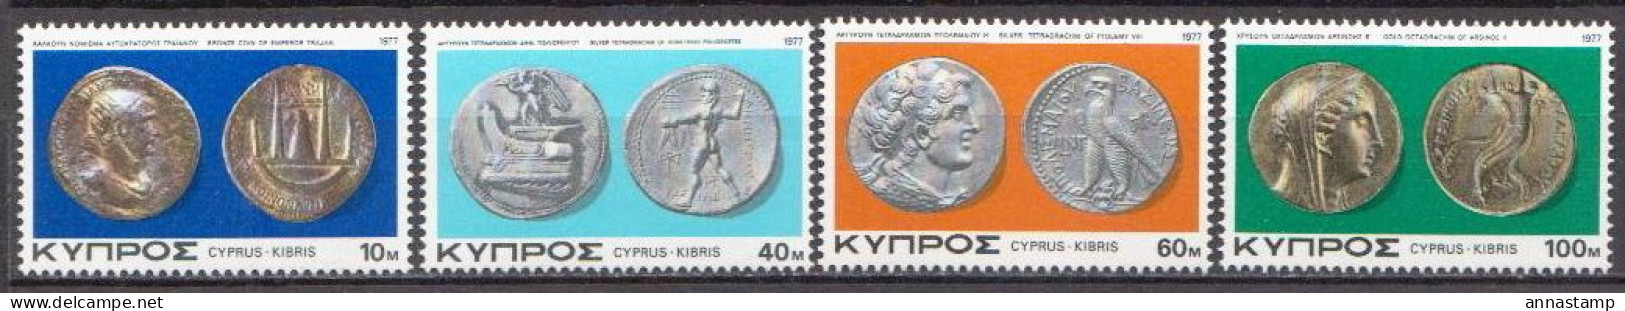 Cyprus MNH Set - Coins